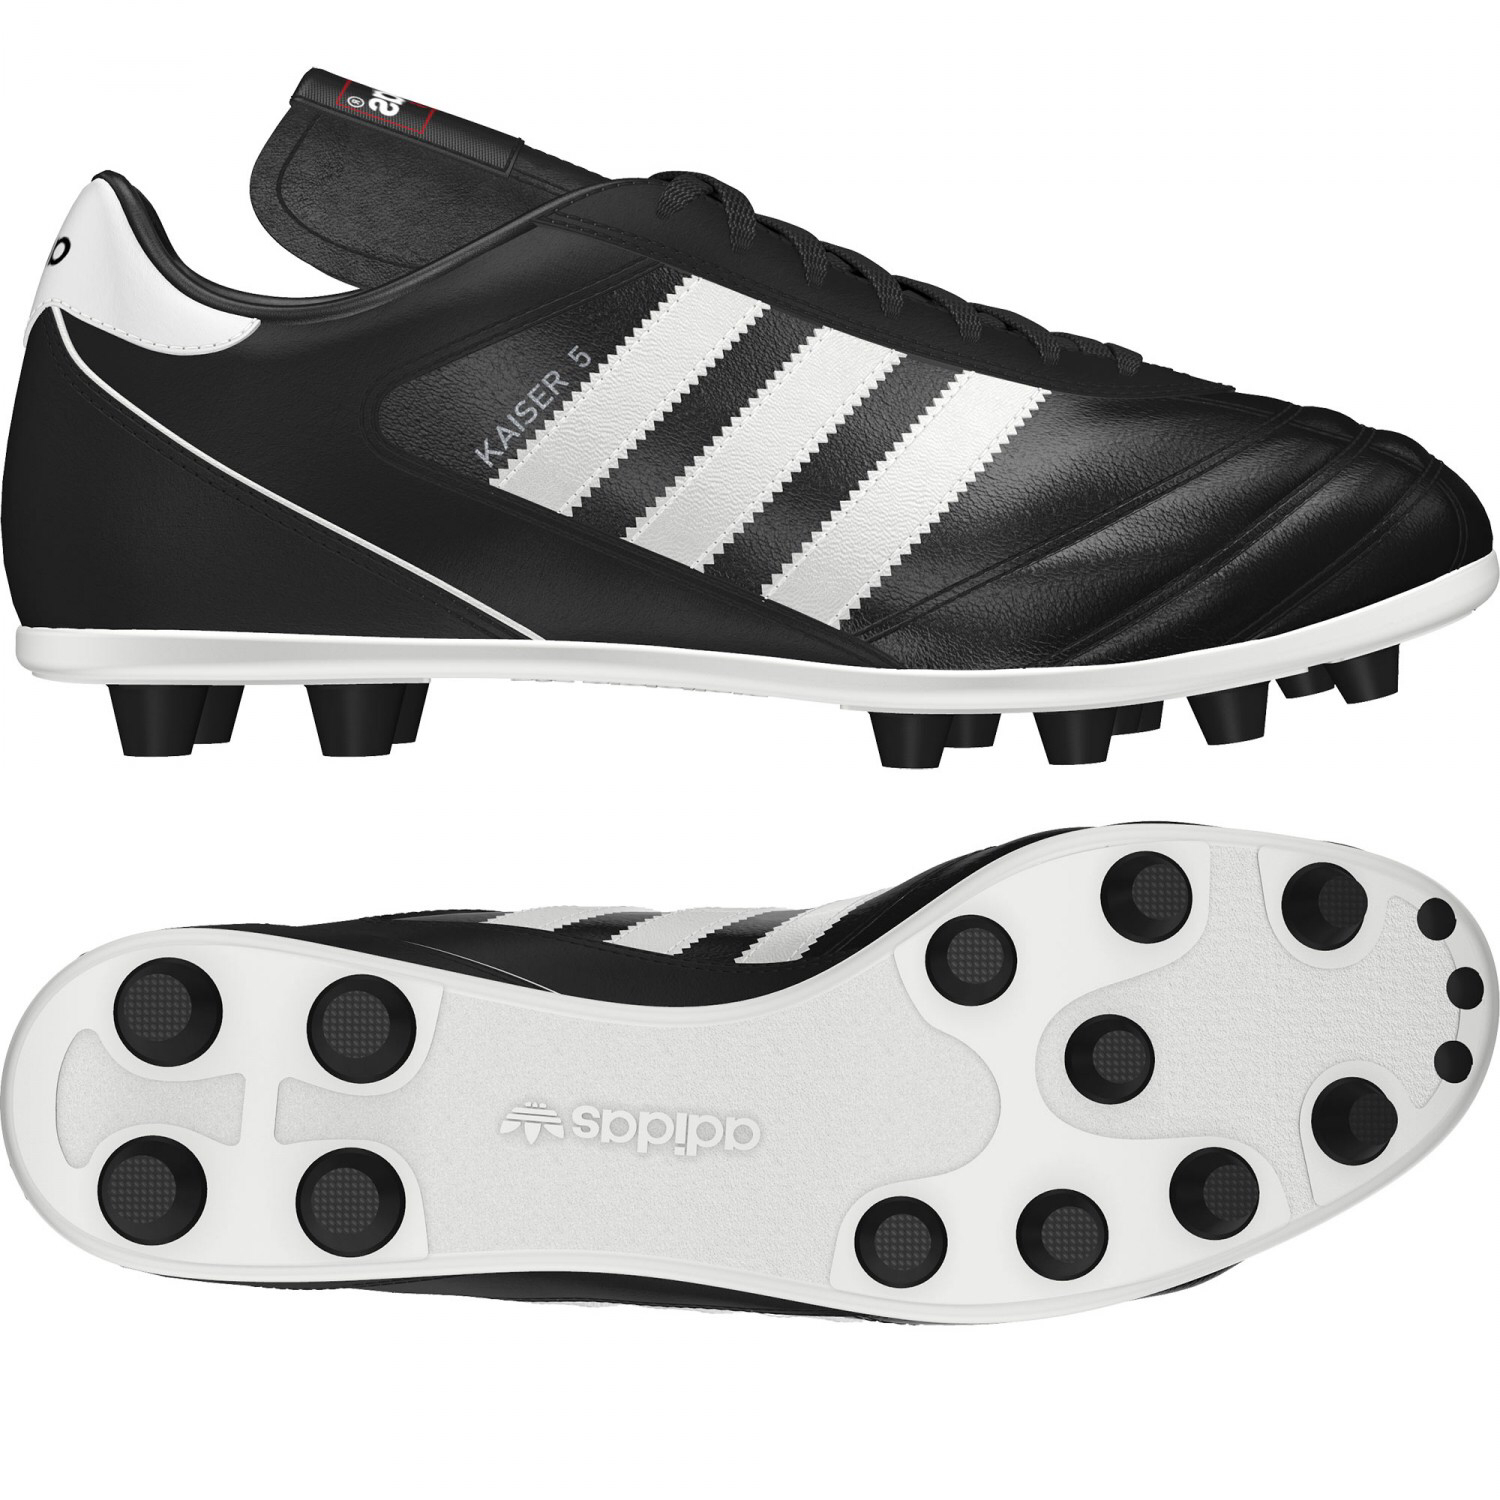 Adidas Kaiser 5 Liga (Black/White) - The Football Factory